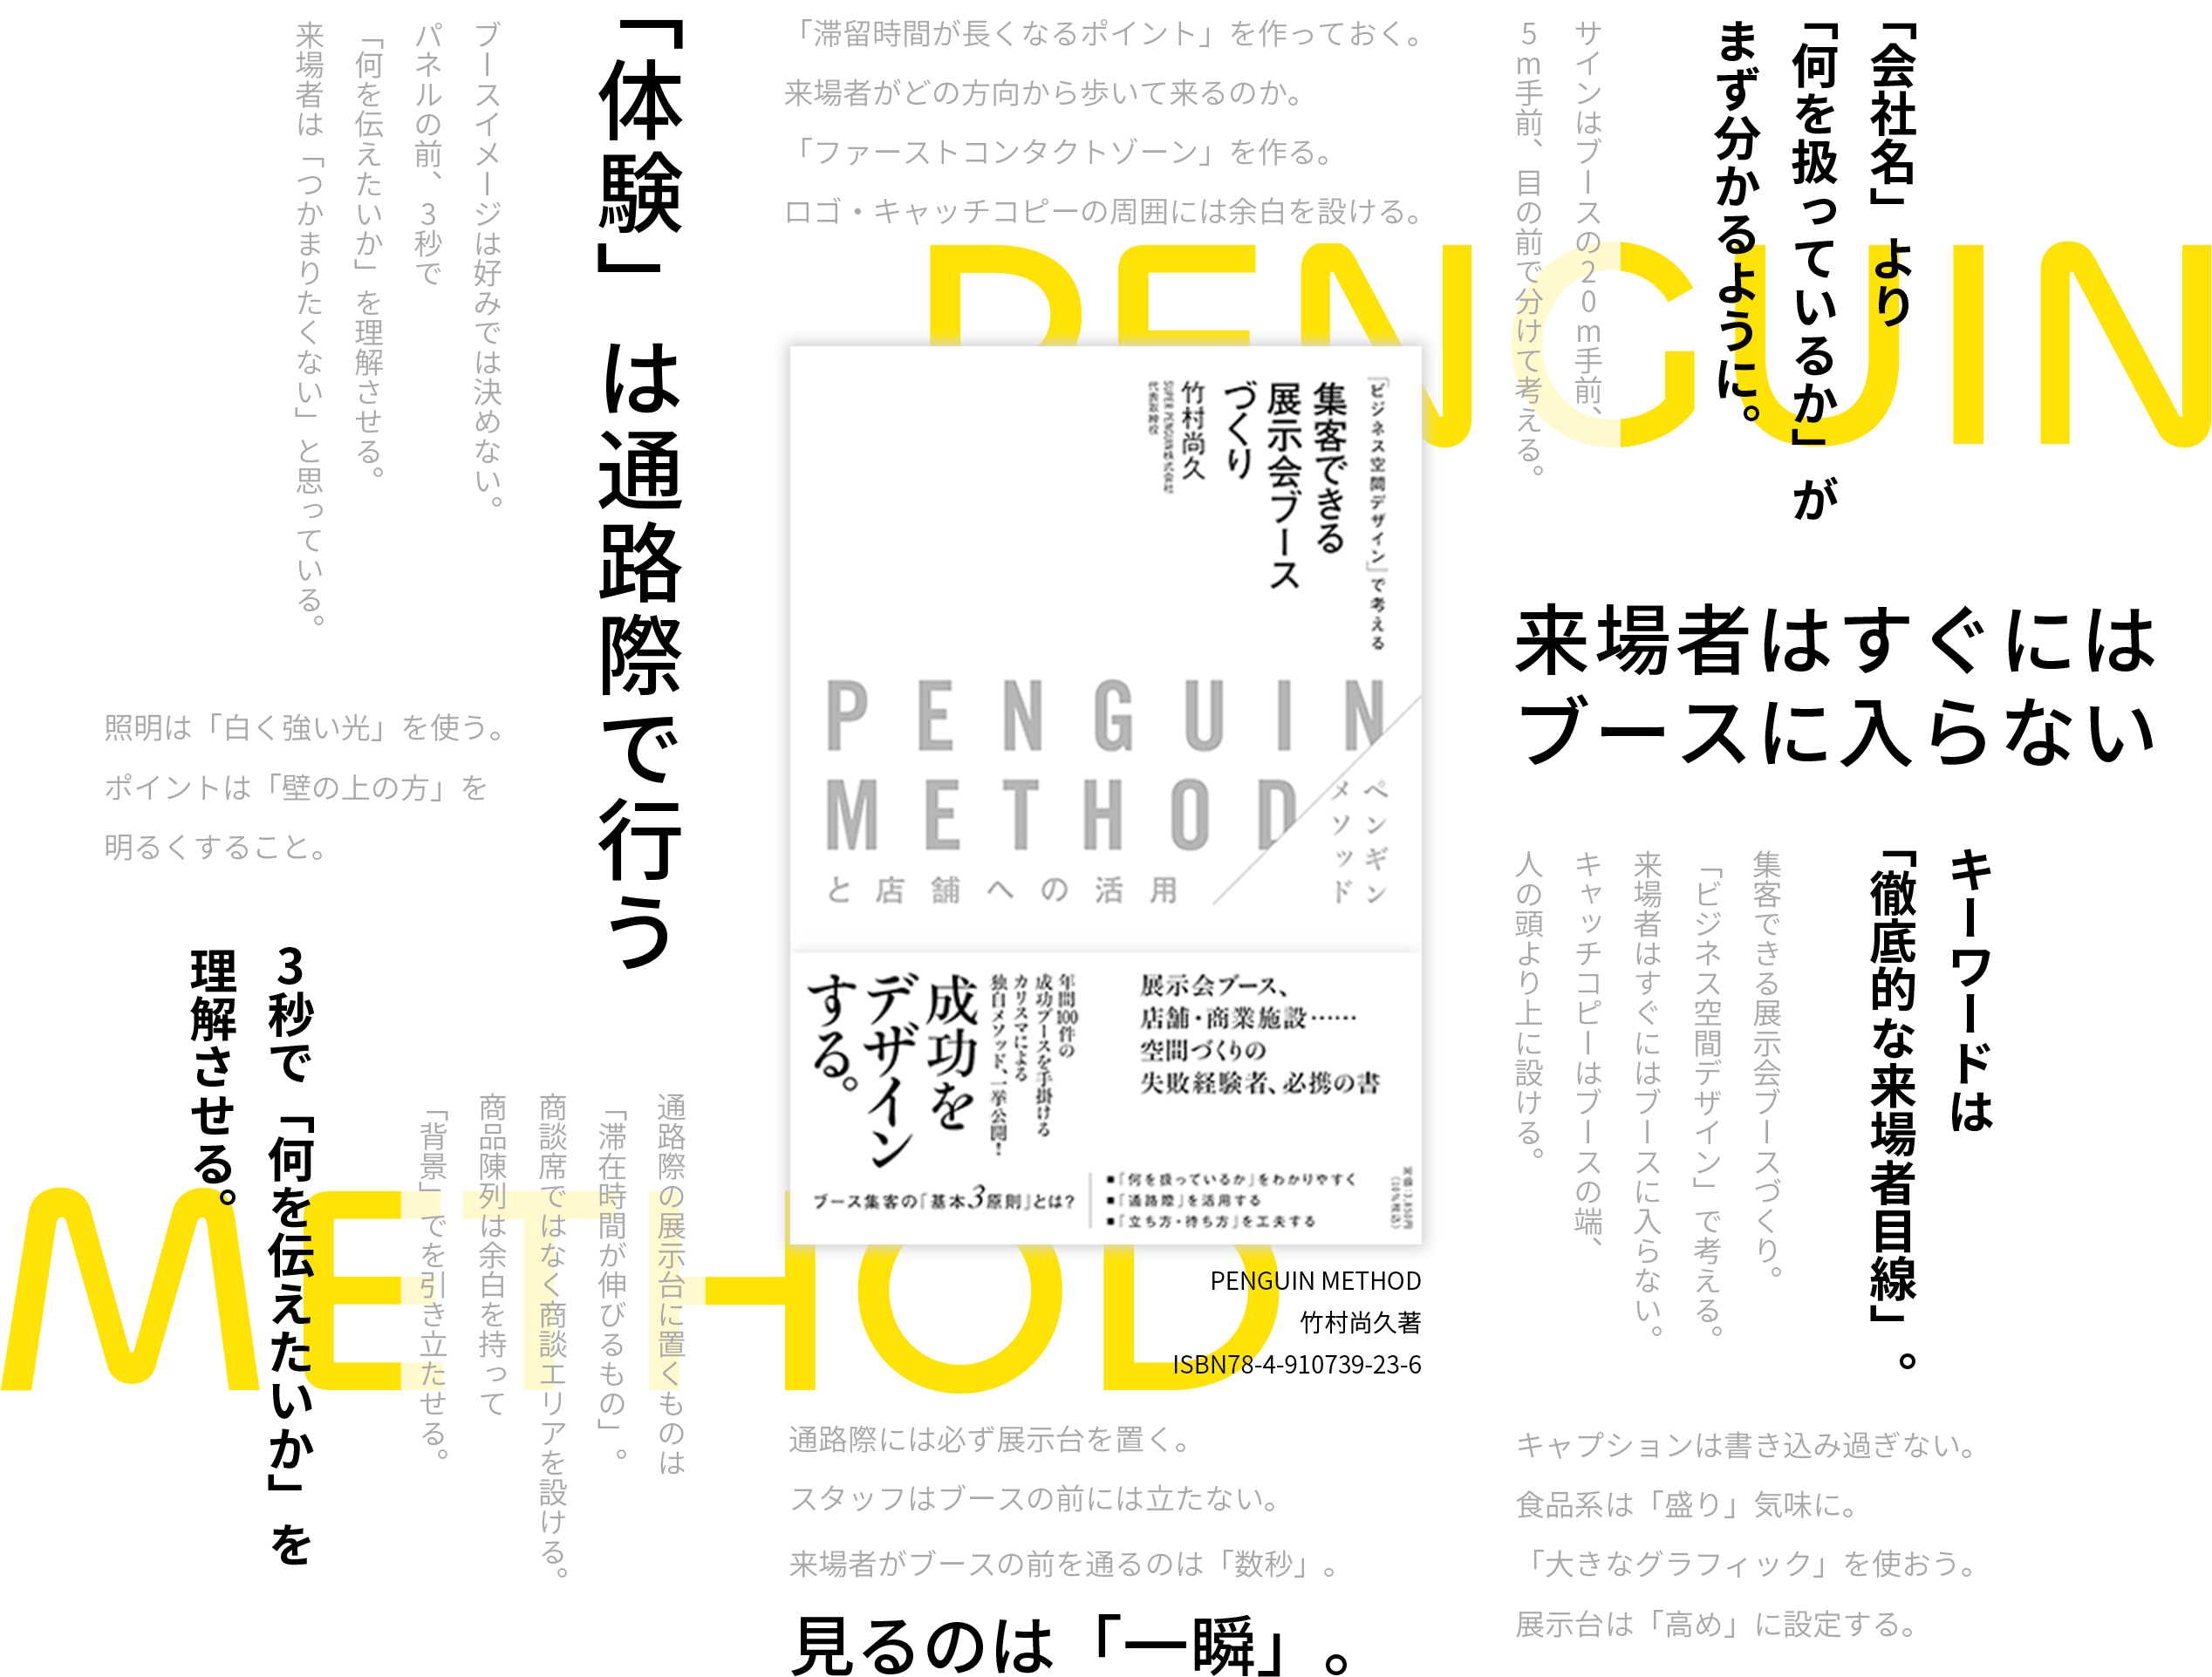 PENGUIN METHOD 竹村尚久著 ISBN78-4-910739-23-6